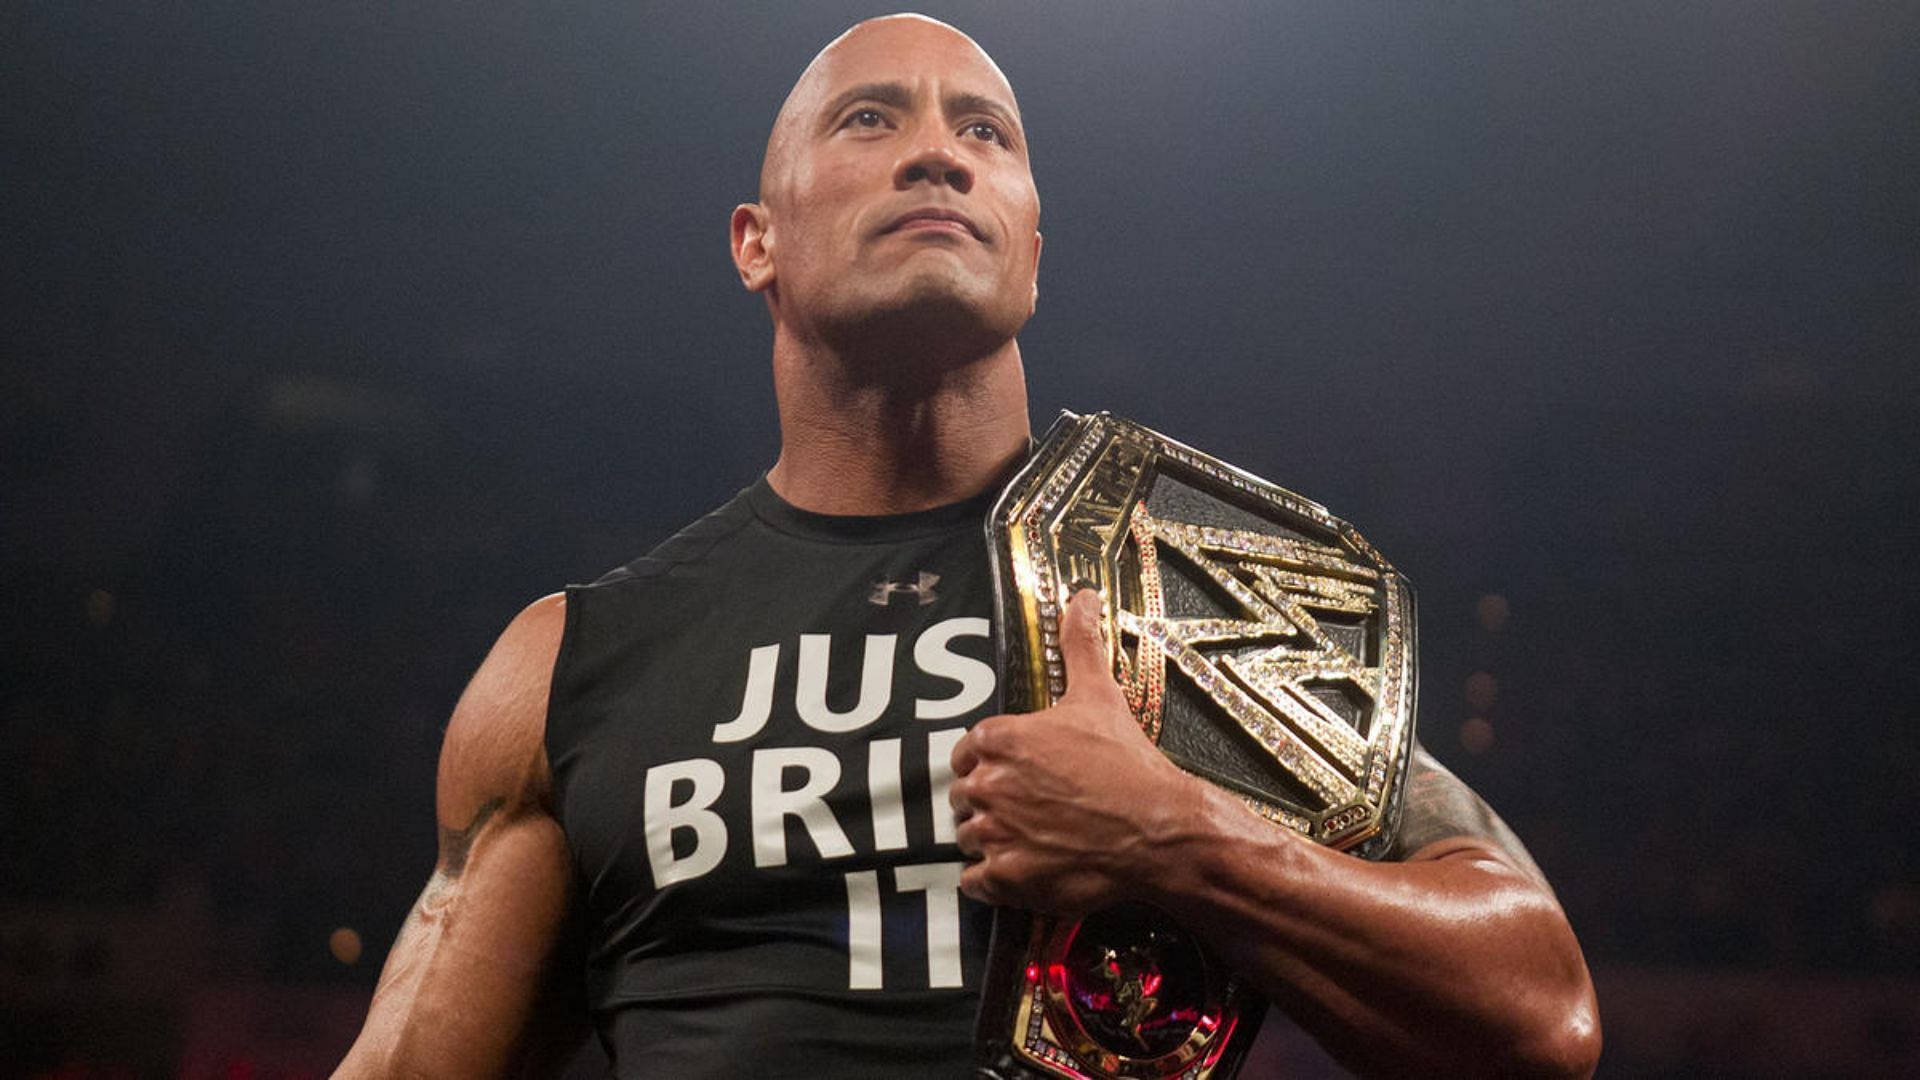 The Rock is a retired WWE legend